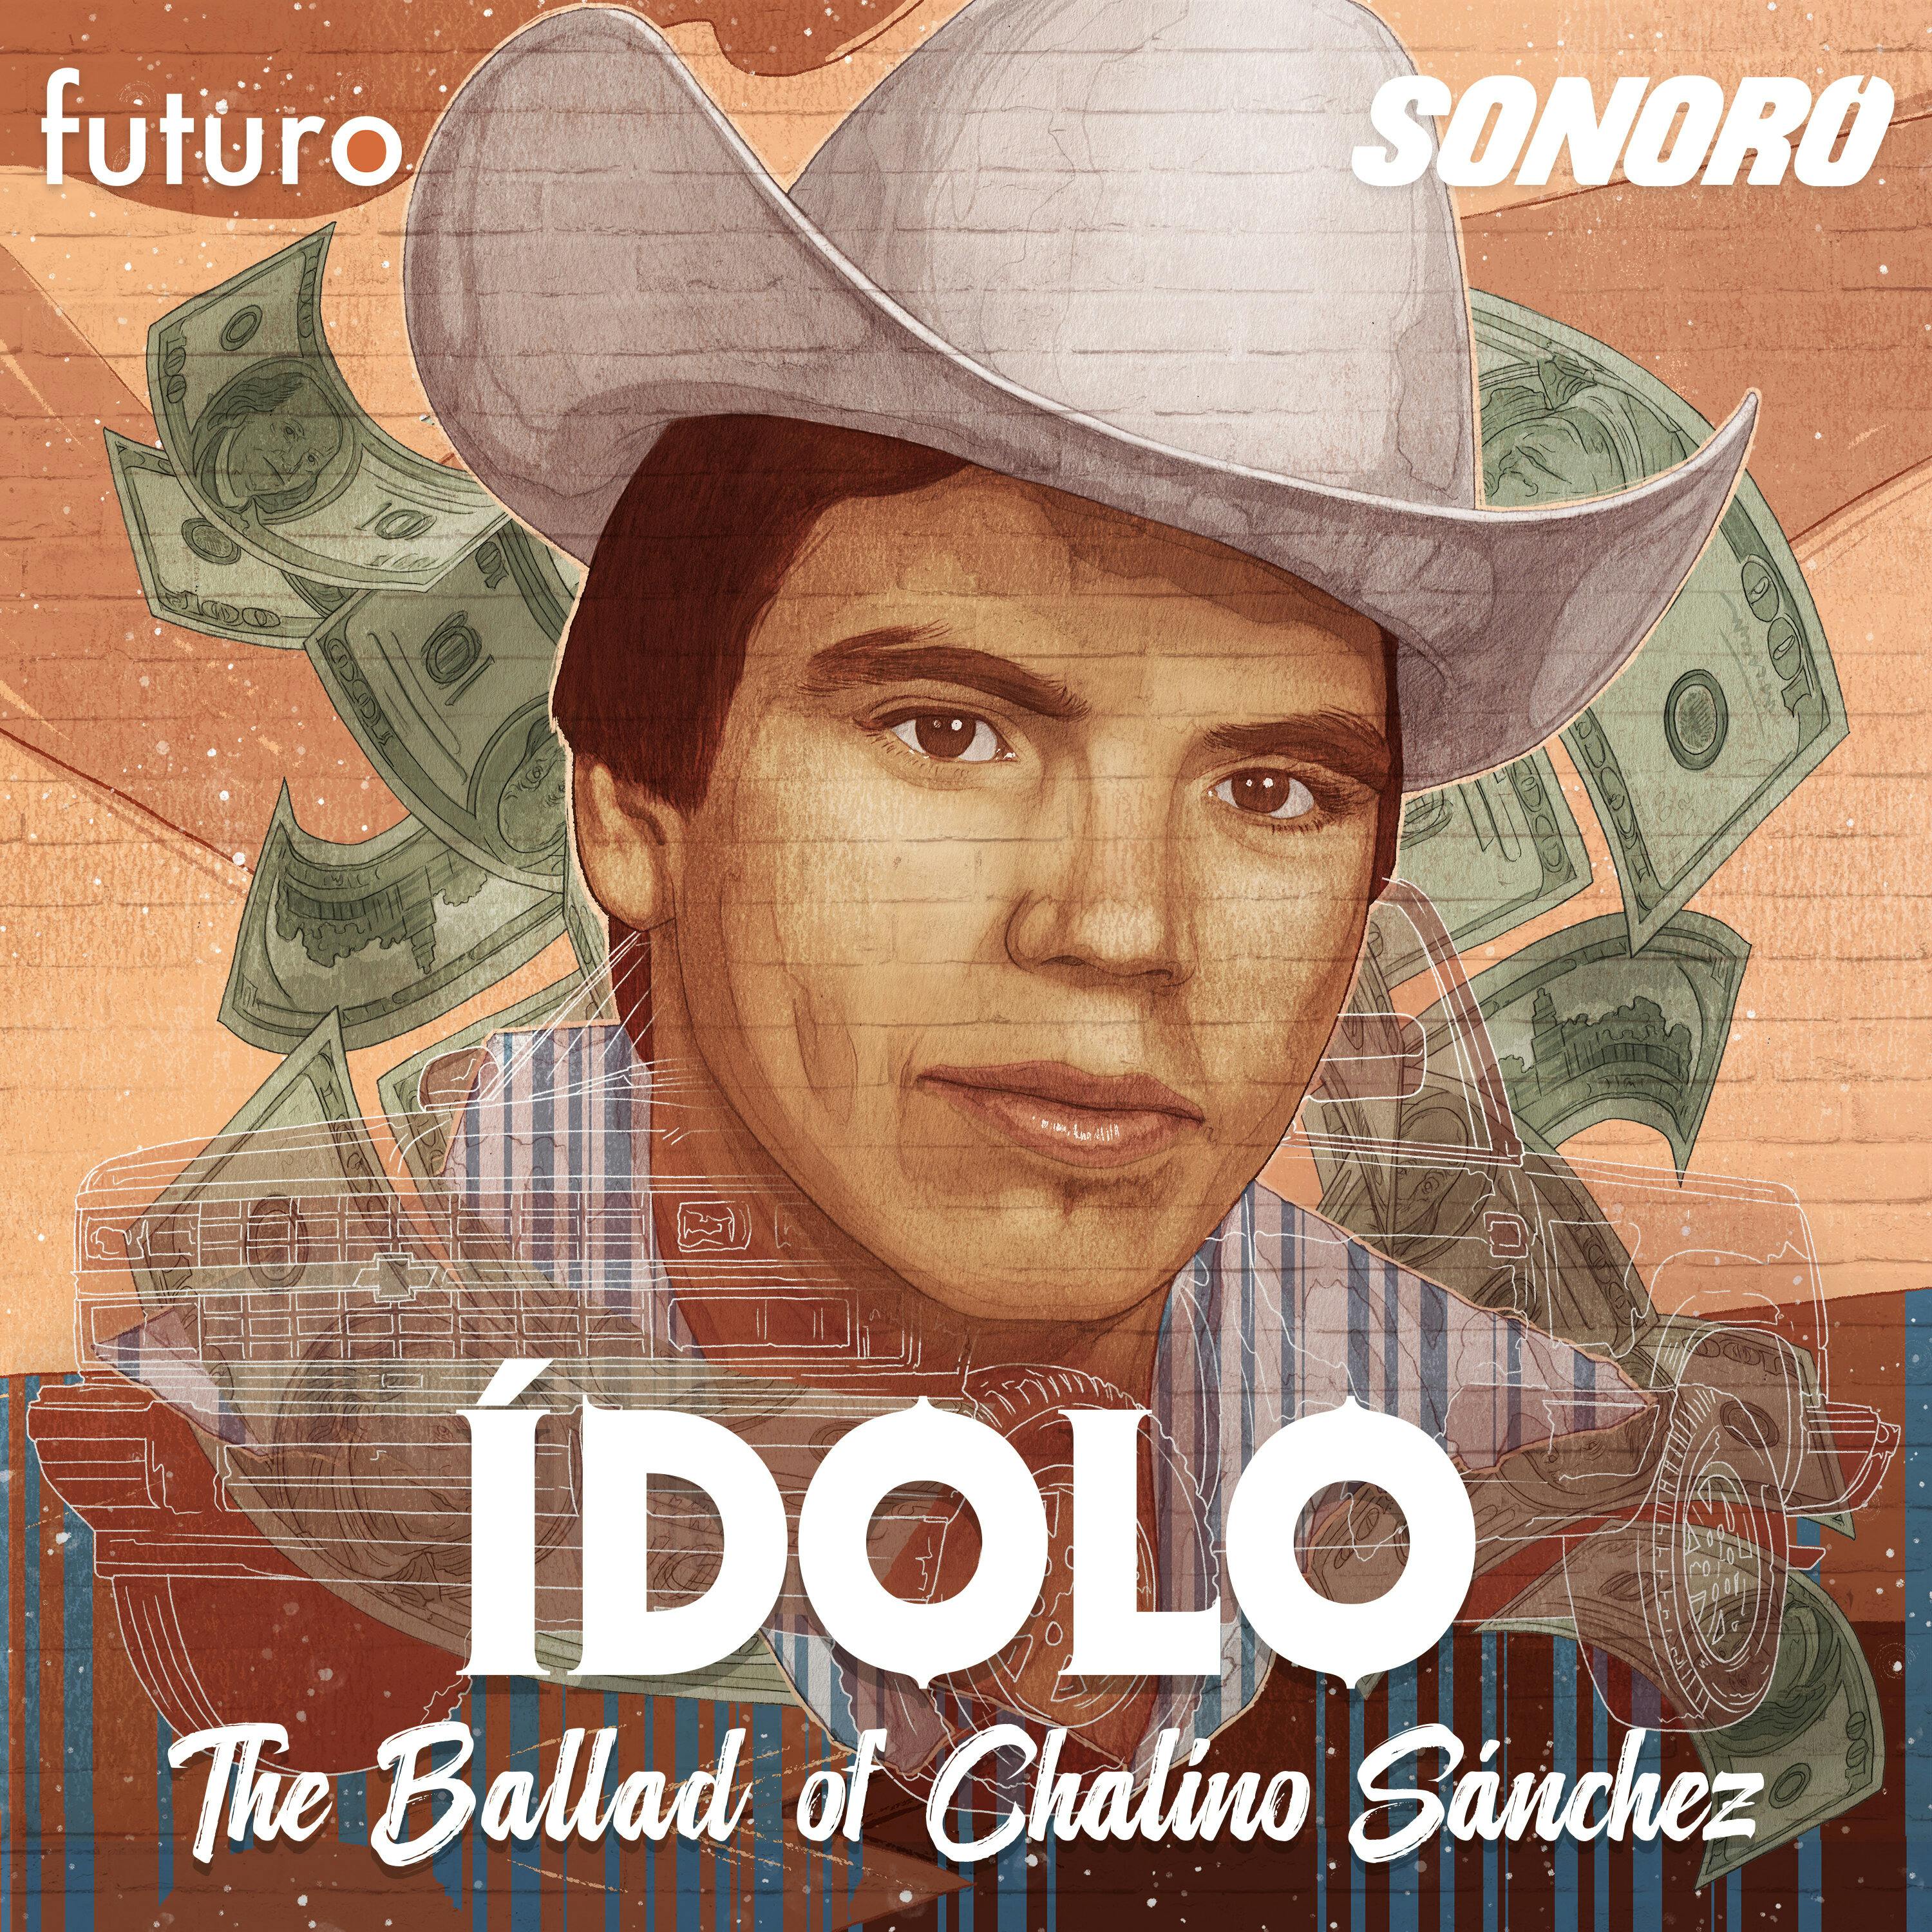 Introducing Ídolo: The Ballad of Chalino Sánchez - Trailer